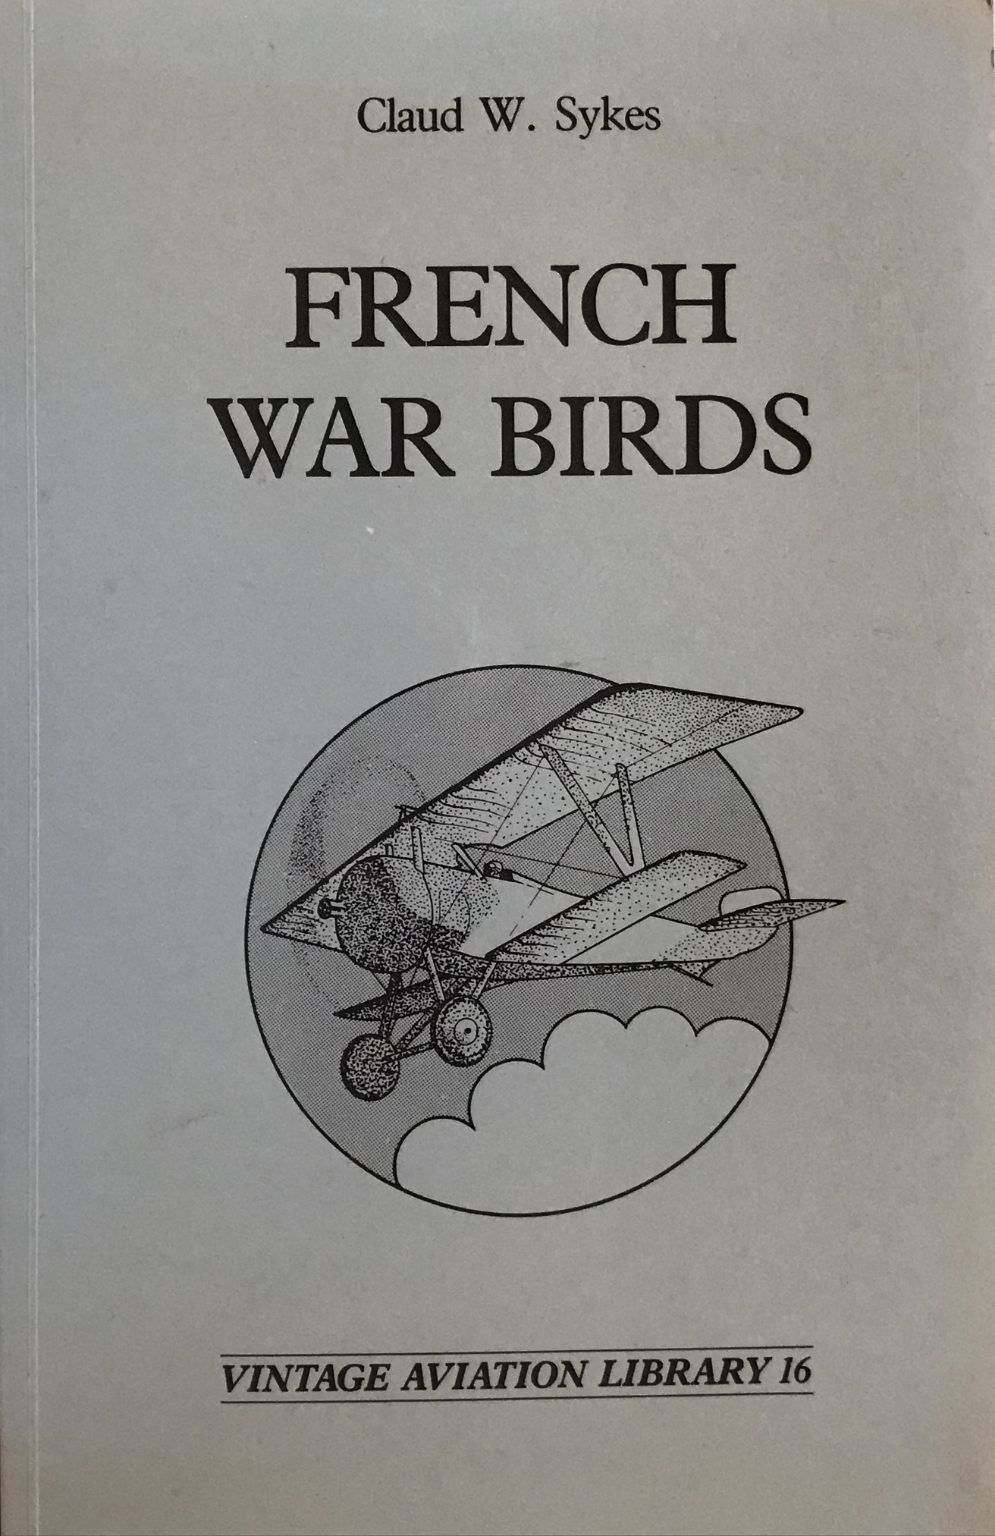 FRENCH WAR BIRDS